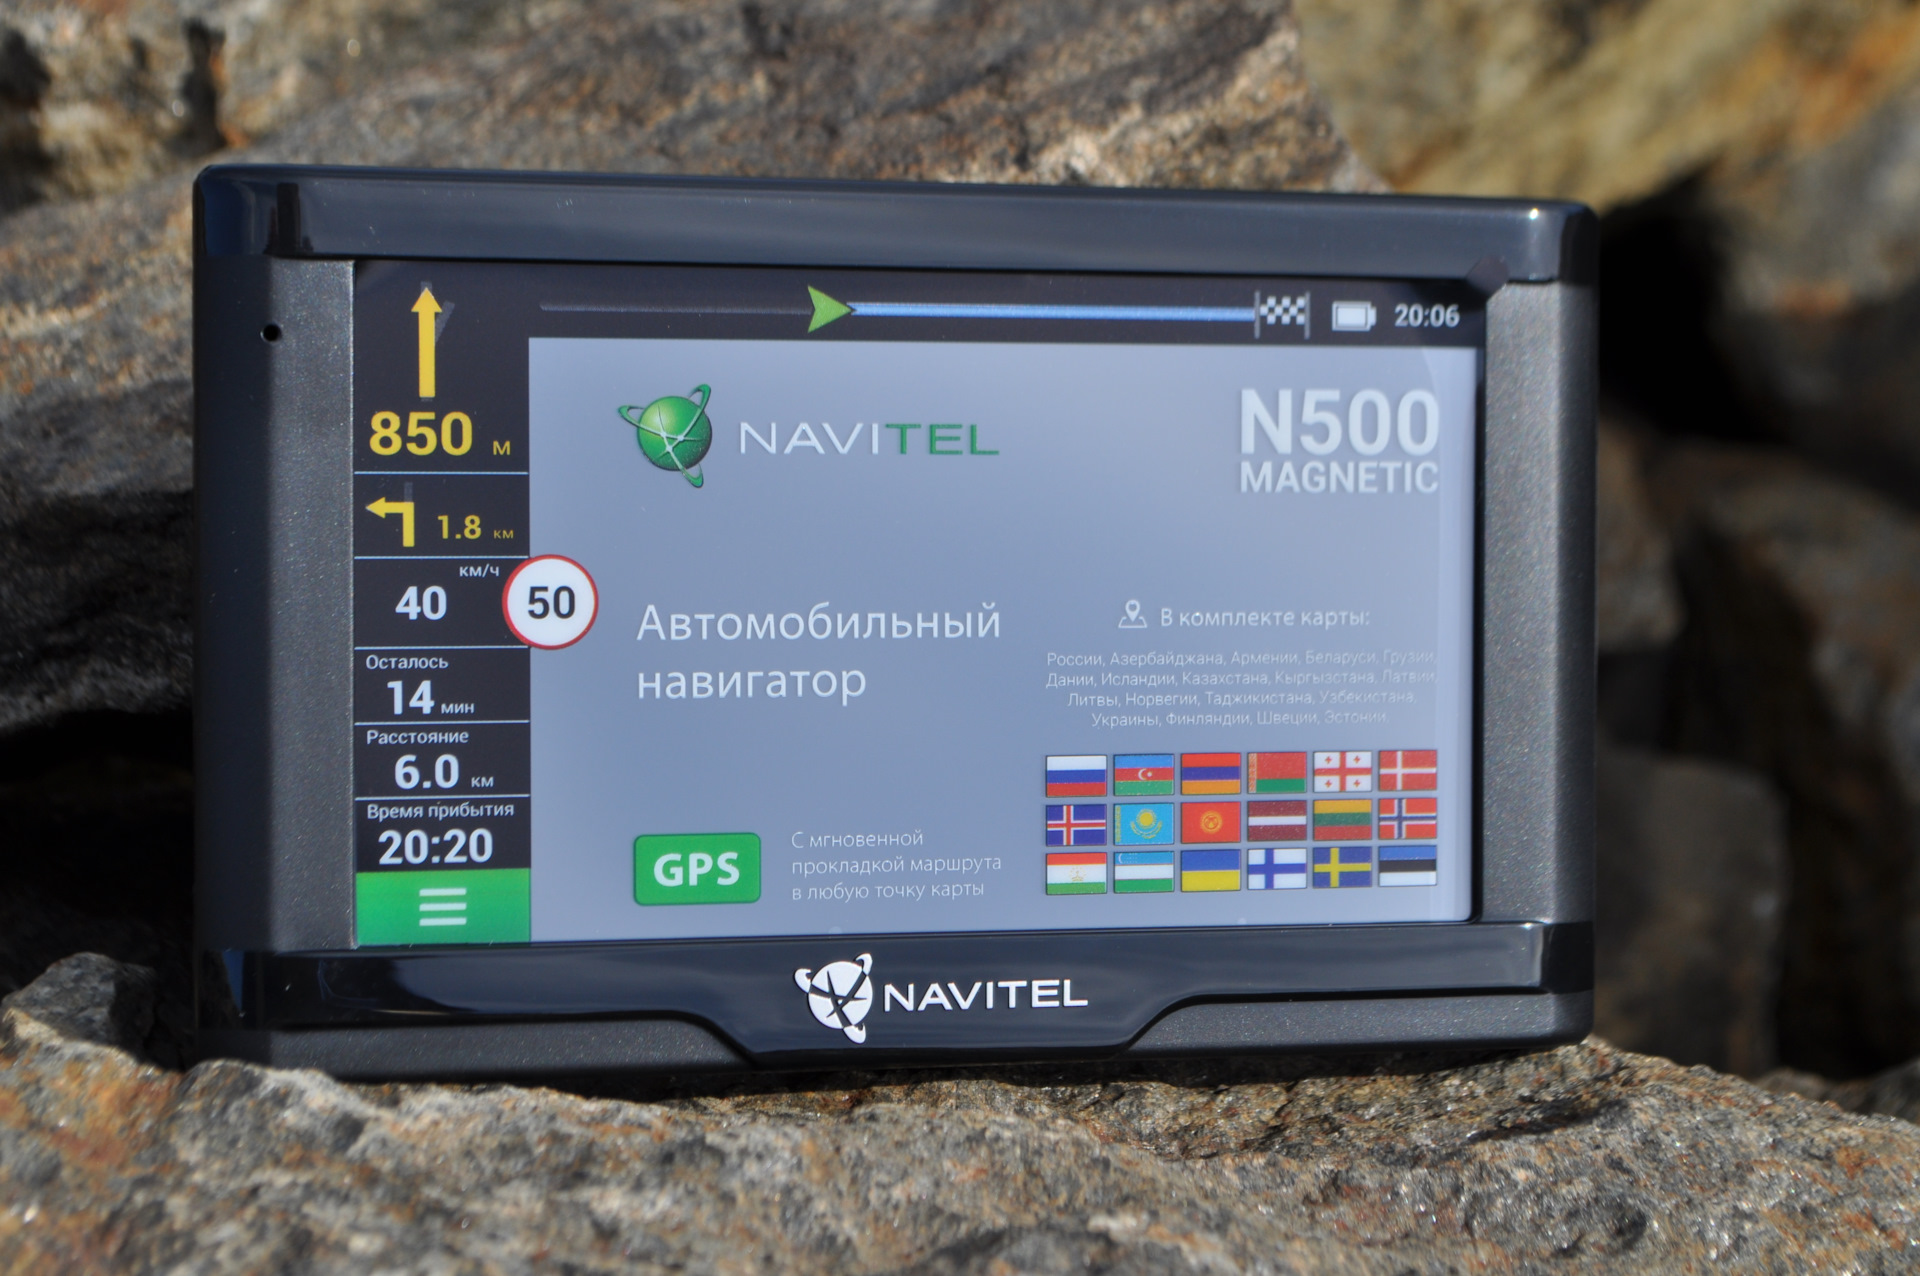 Навигатор Navitel n500 Magnetic аккумулятор